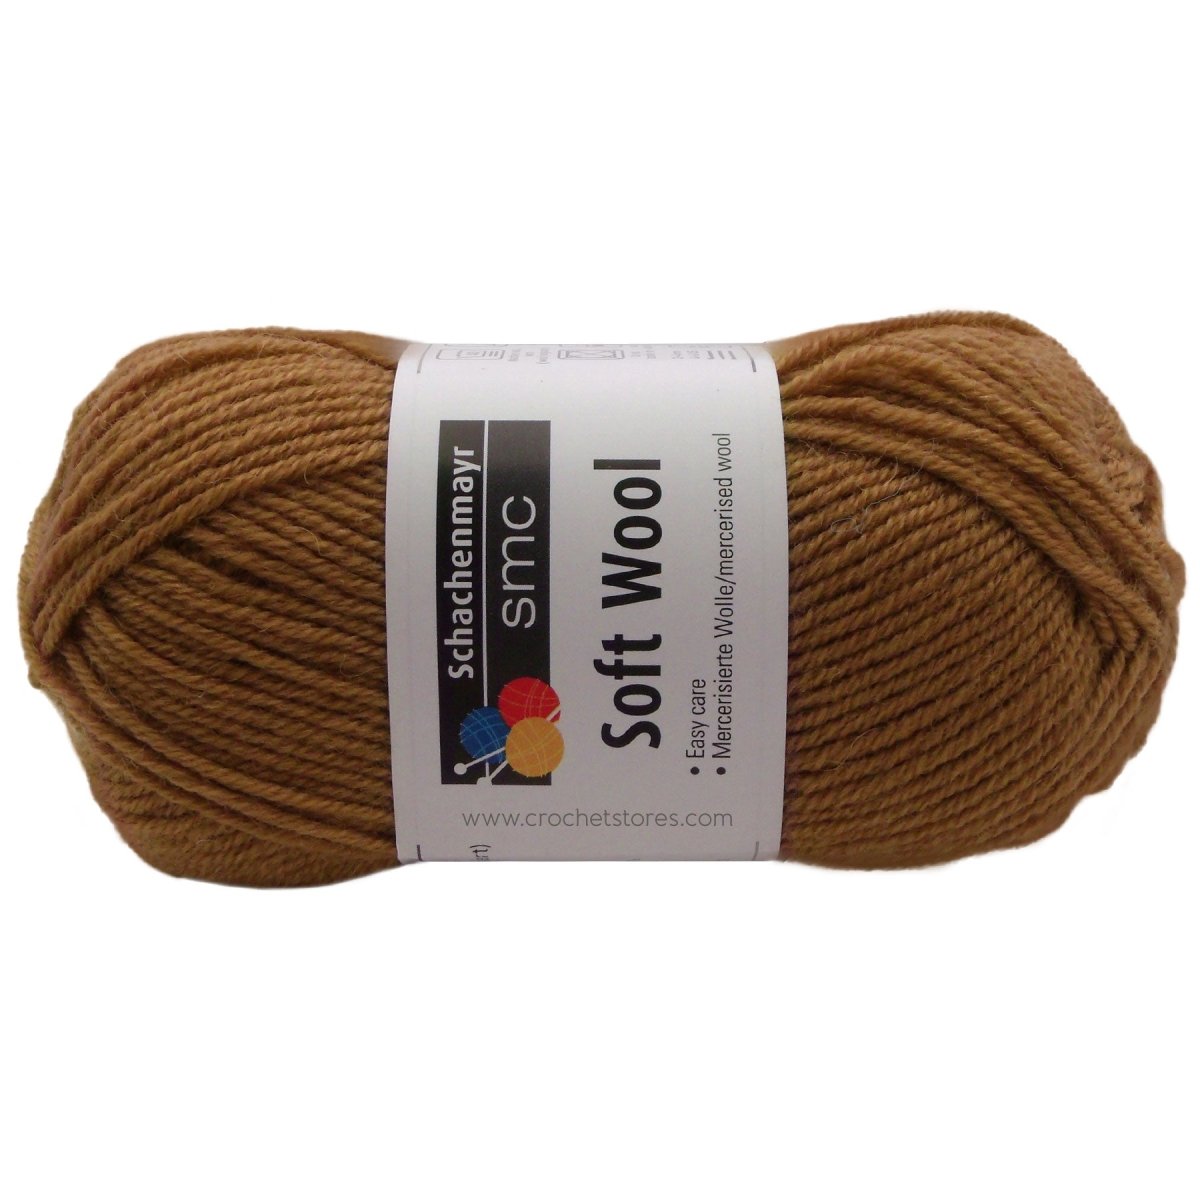 SOFT WOOL - Crochetstores9807536-124082700938261